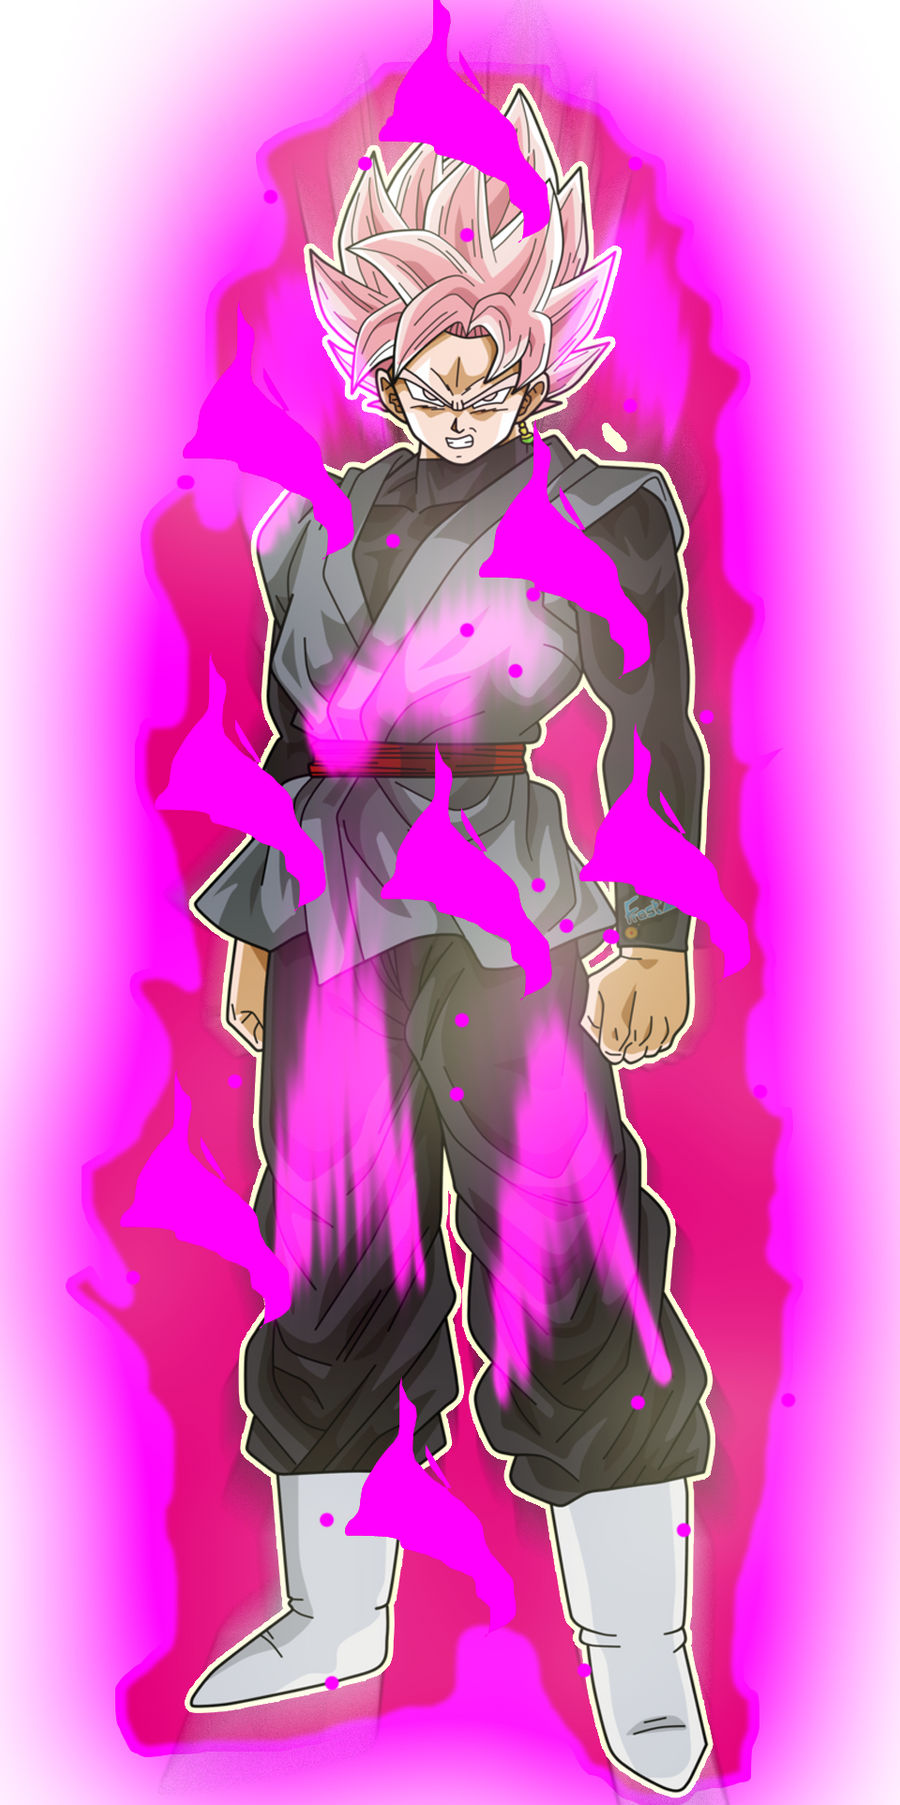 Goku Black Super Saiyan Rose Aura By Gokuxdxdxdz On Deviantart